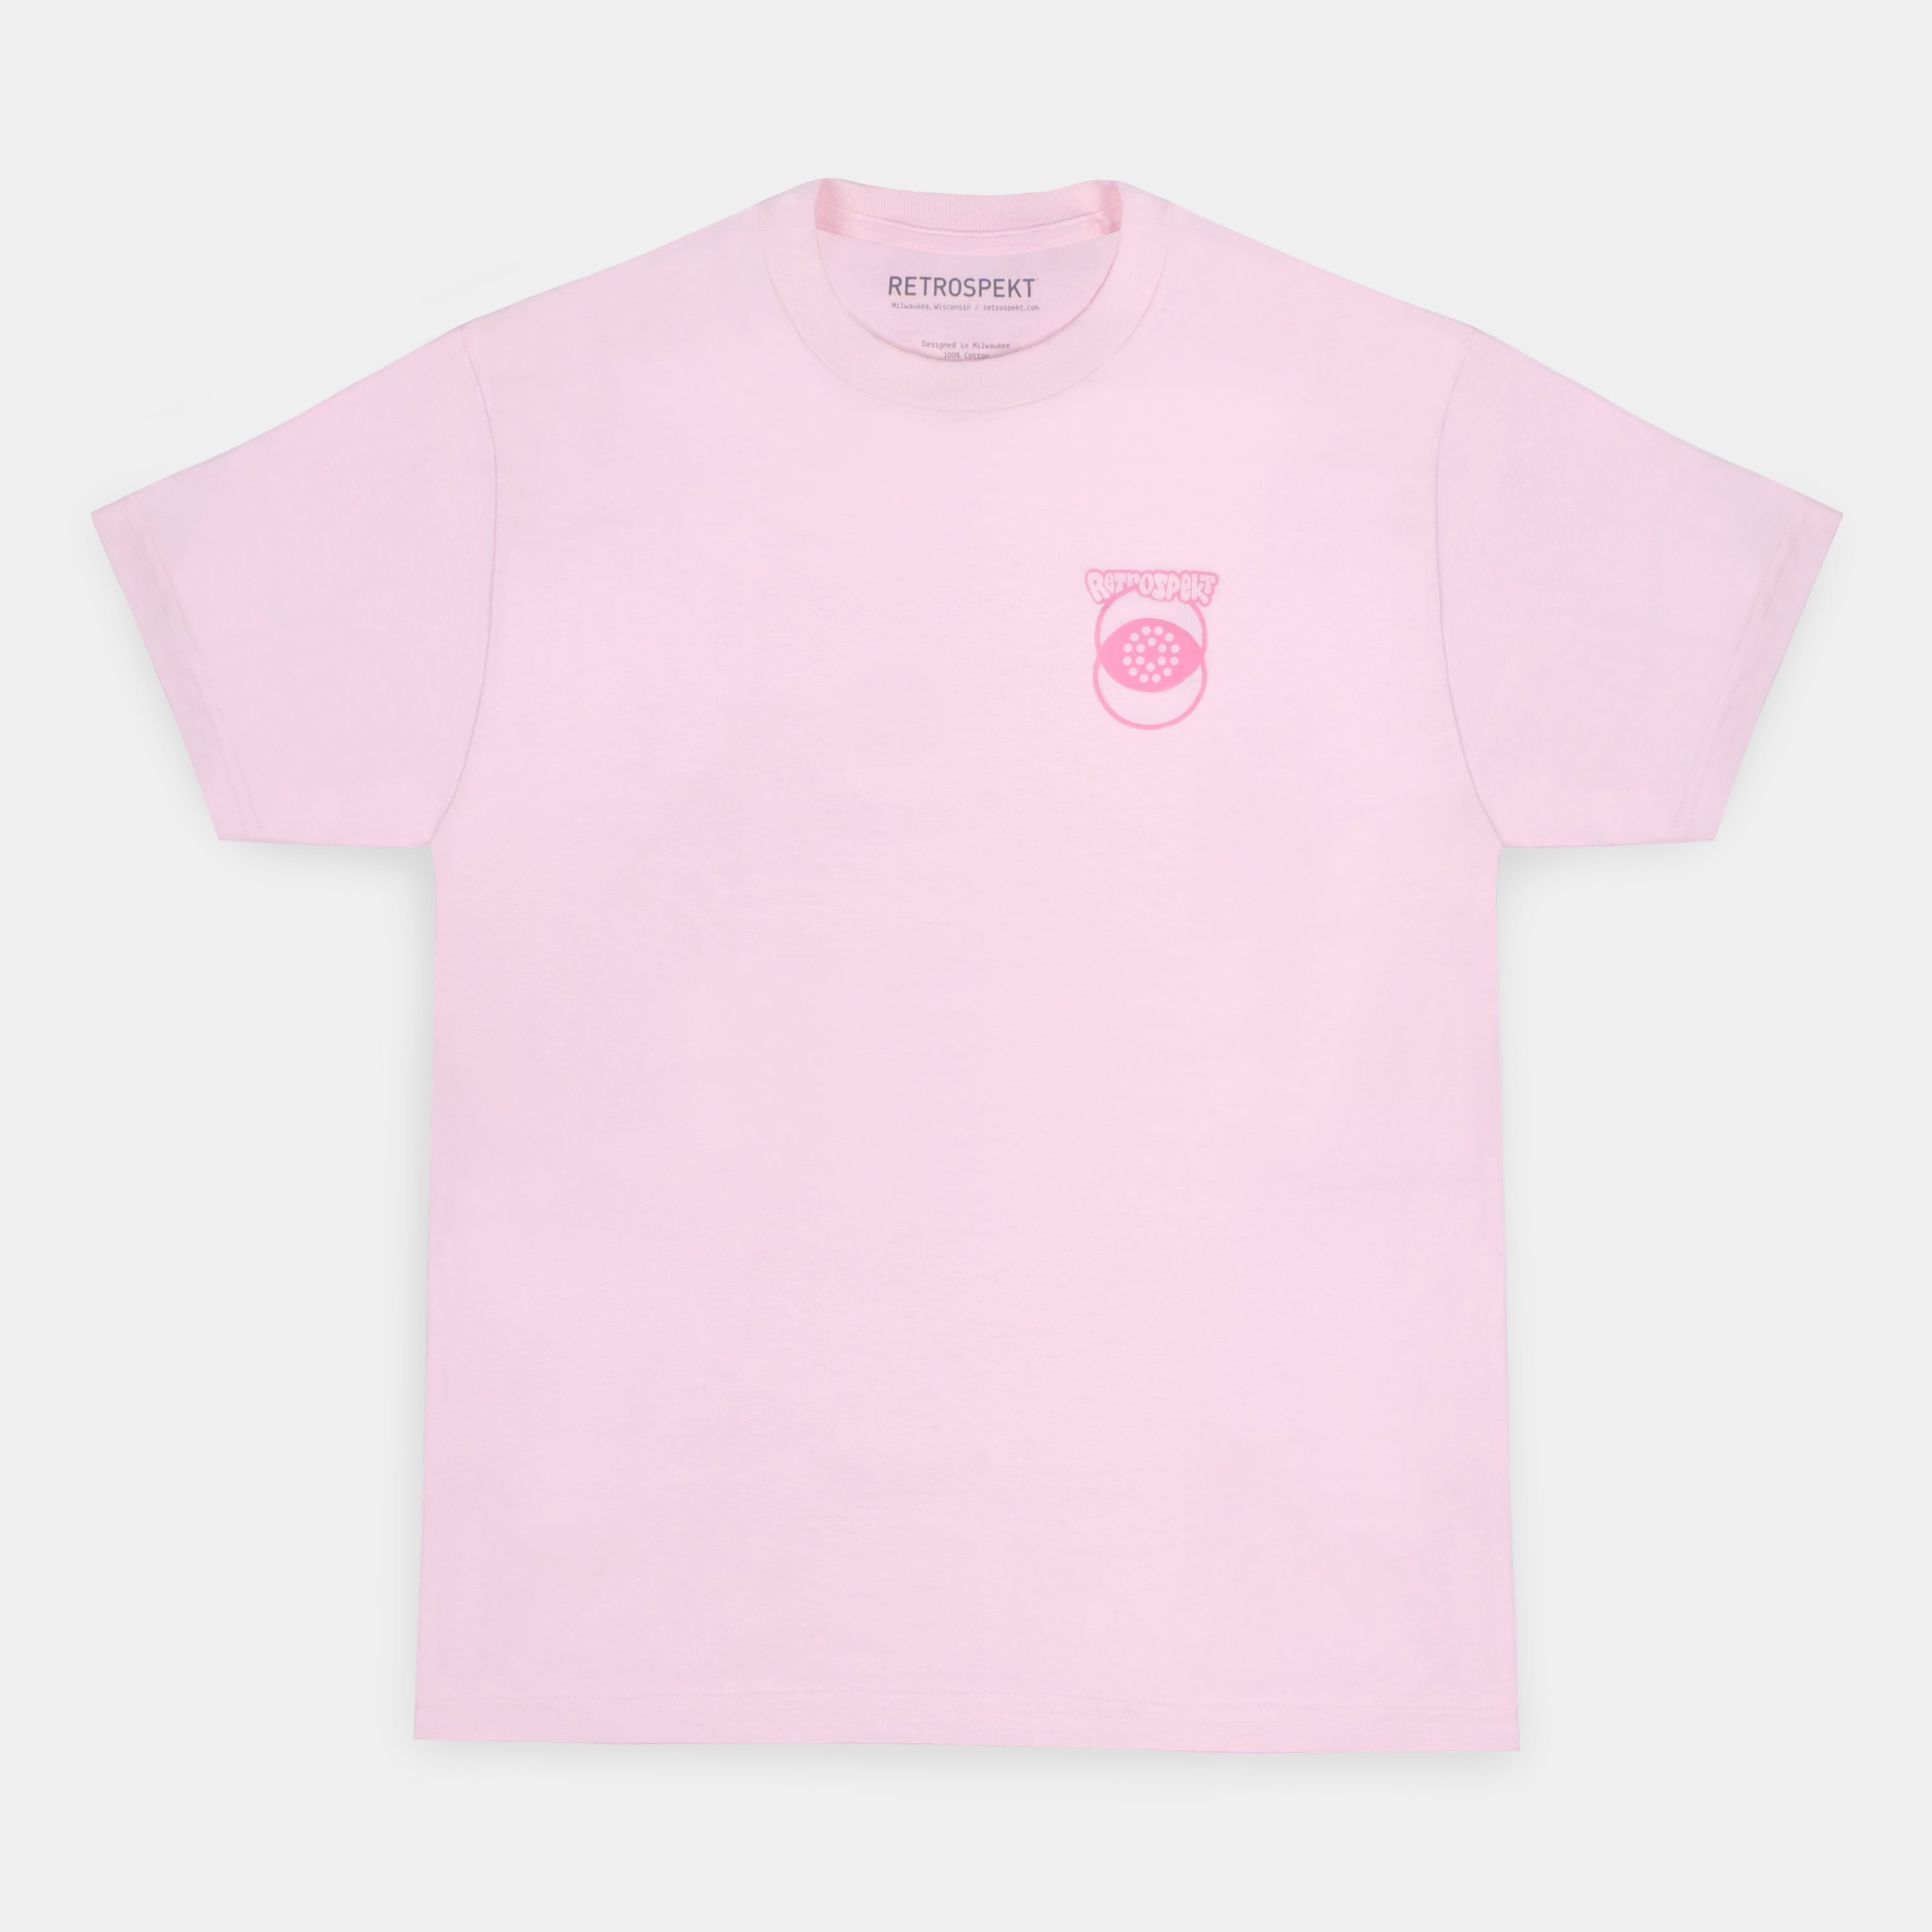 Weselmann Pink Evan T-Shirt Retrospekt x